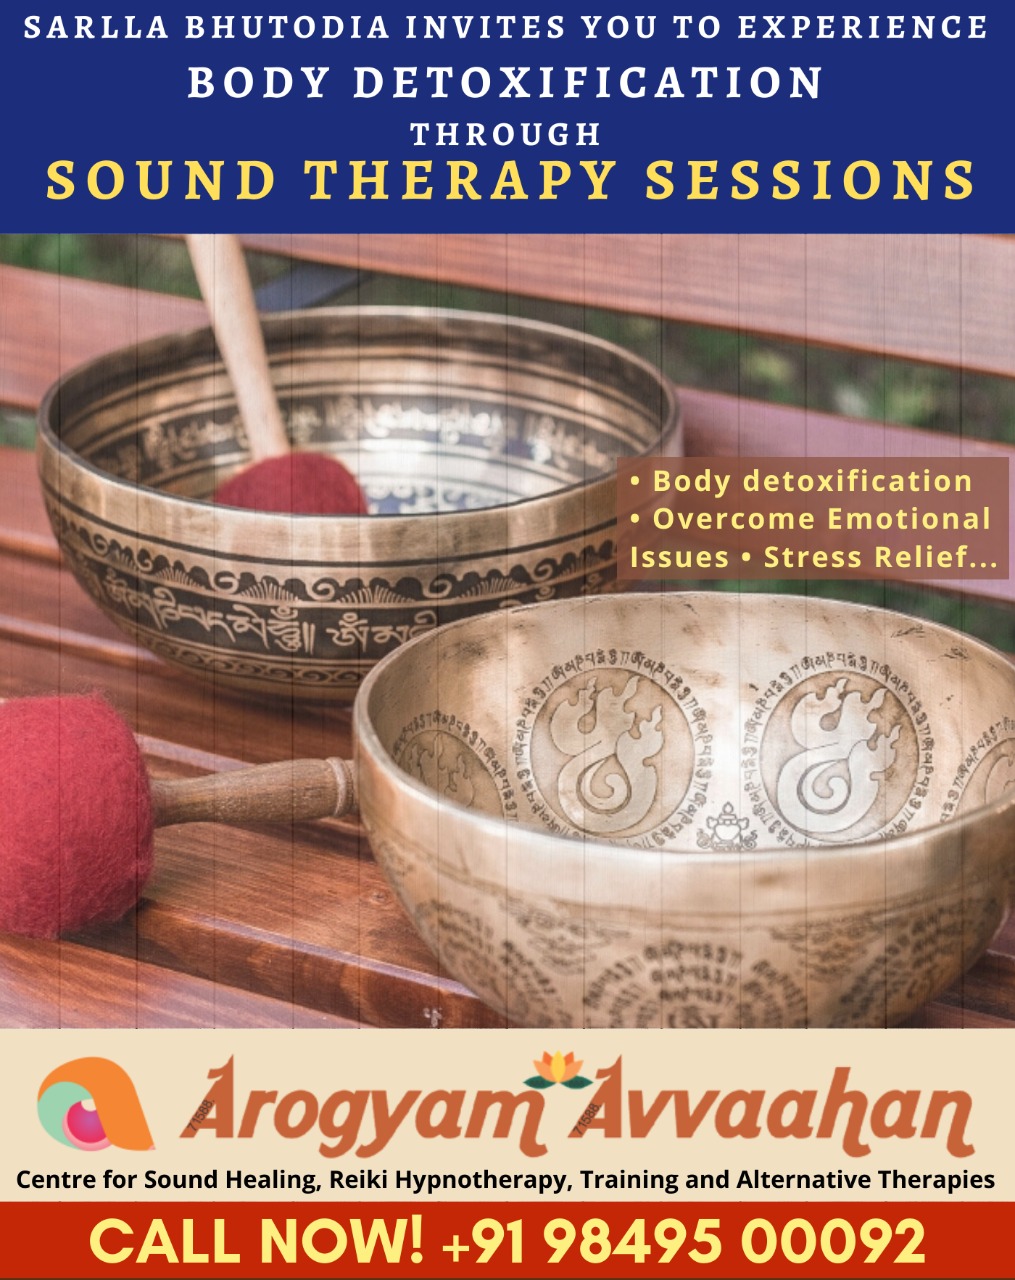 Body Detoxification through sound healing by Sarla Bhutoria- Jammu